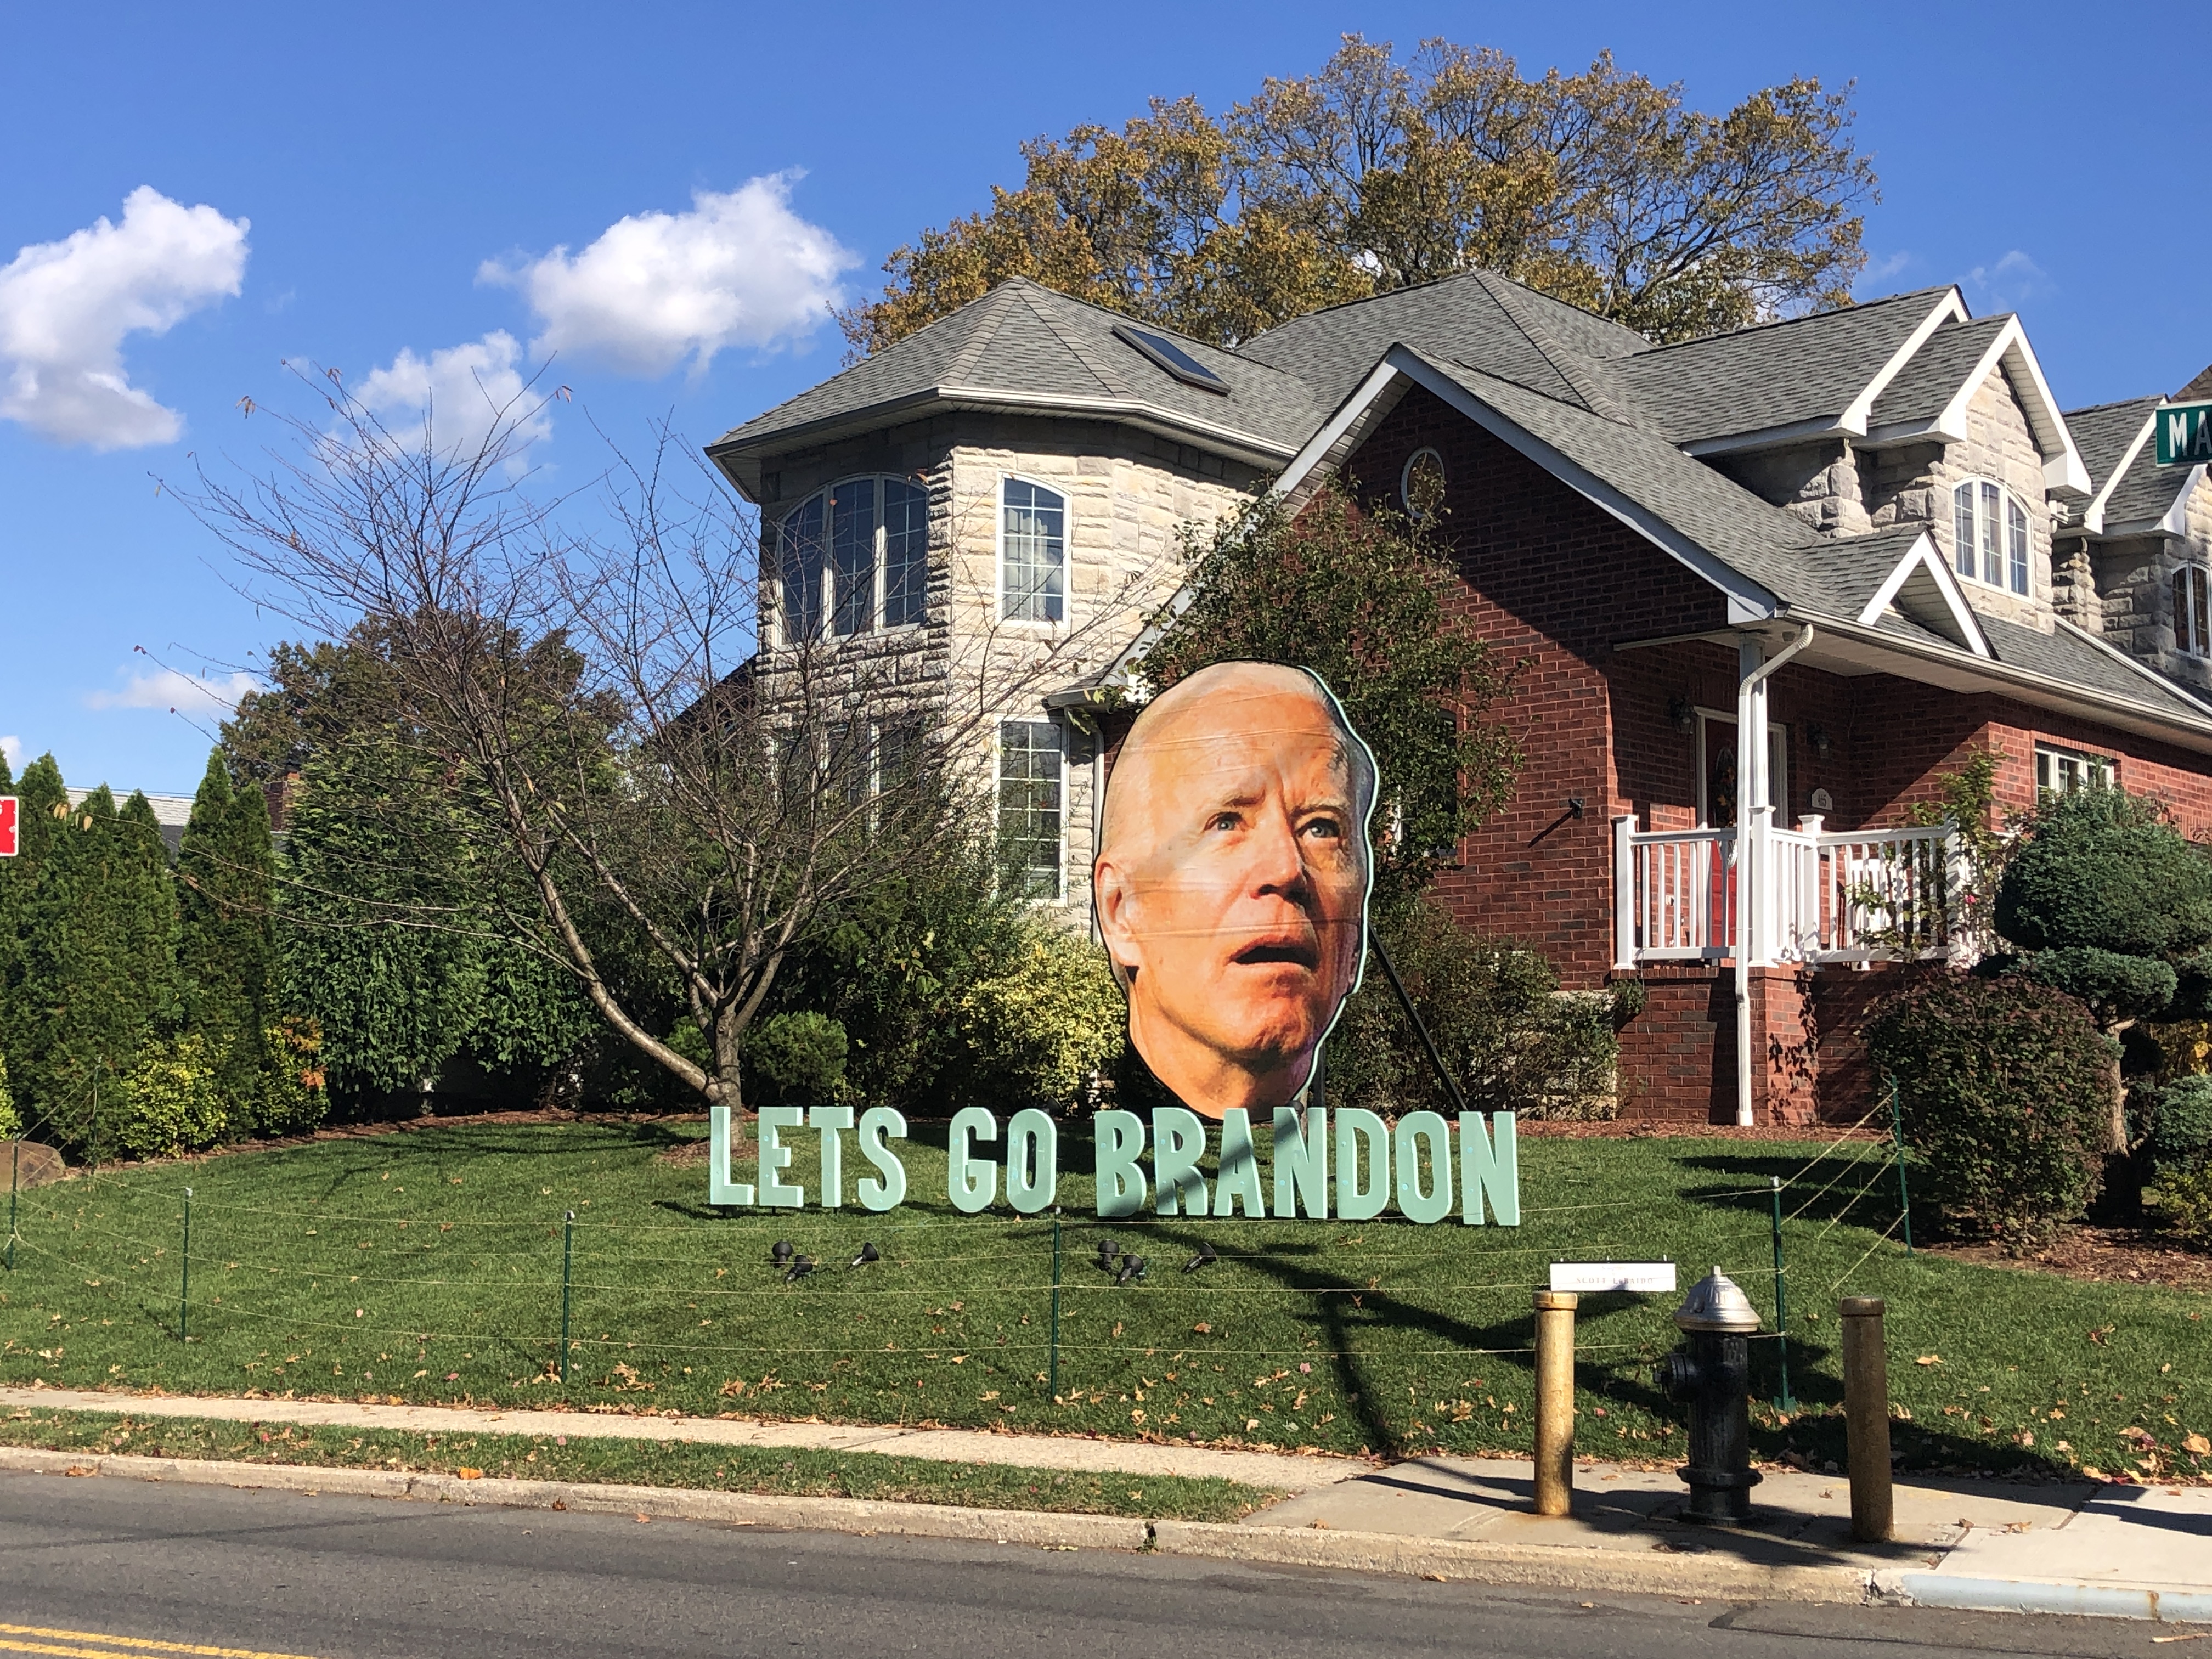 Large Biden 'Let's go Brandon' lawn installation erected on Staten Island 